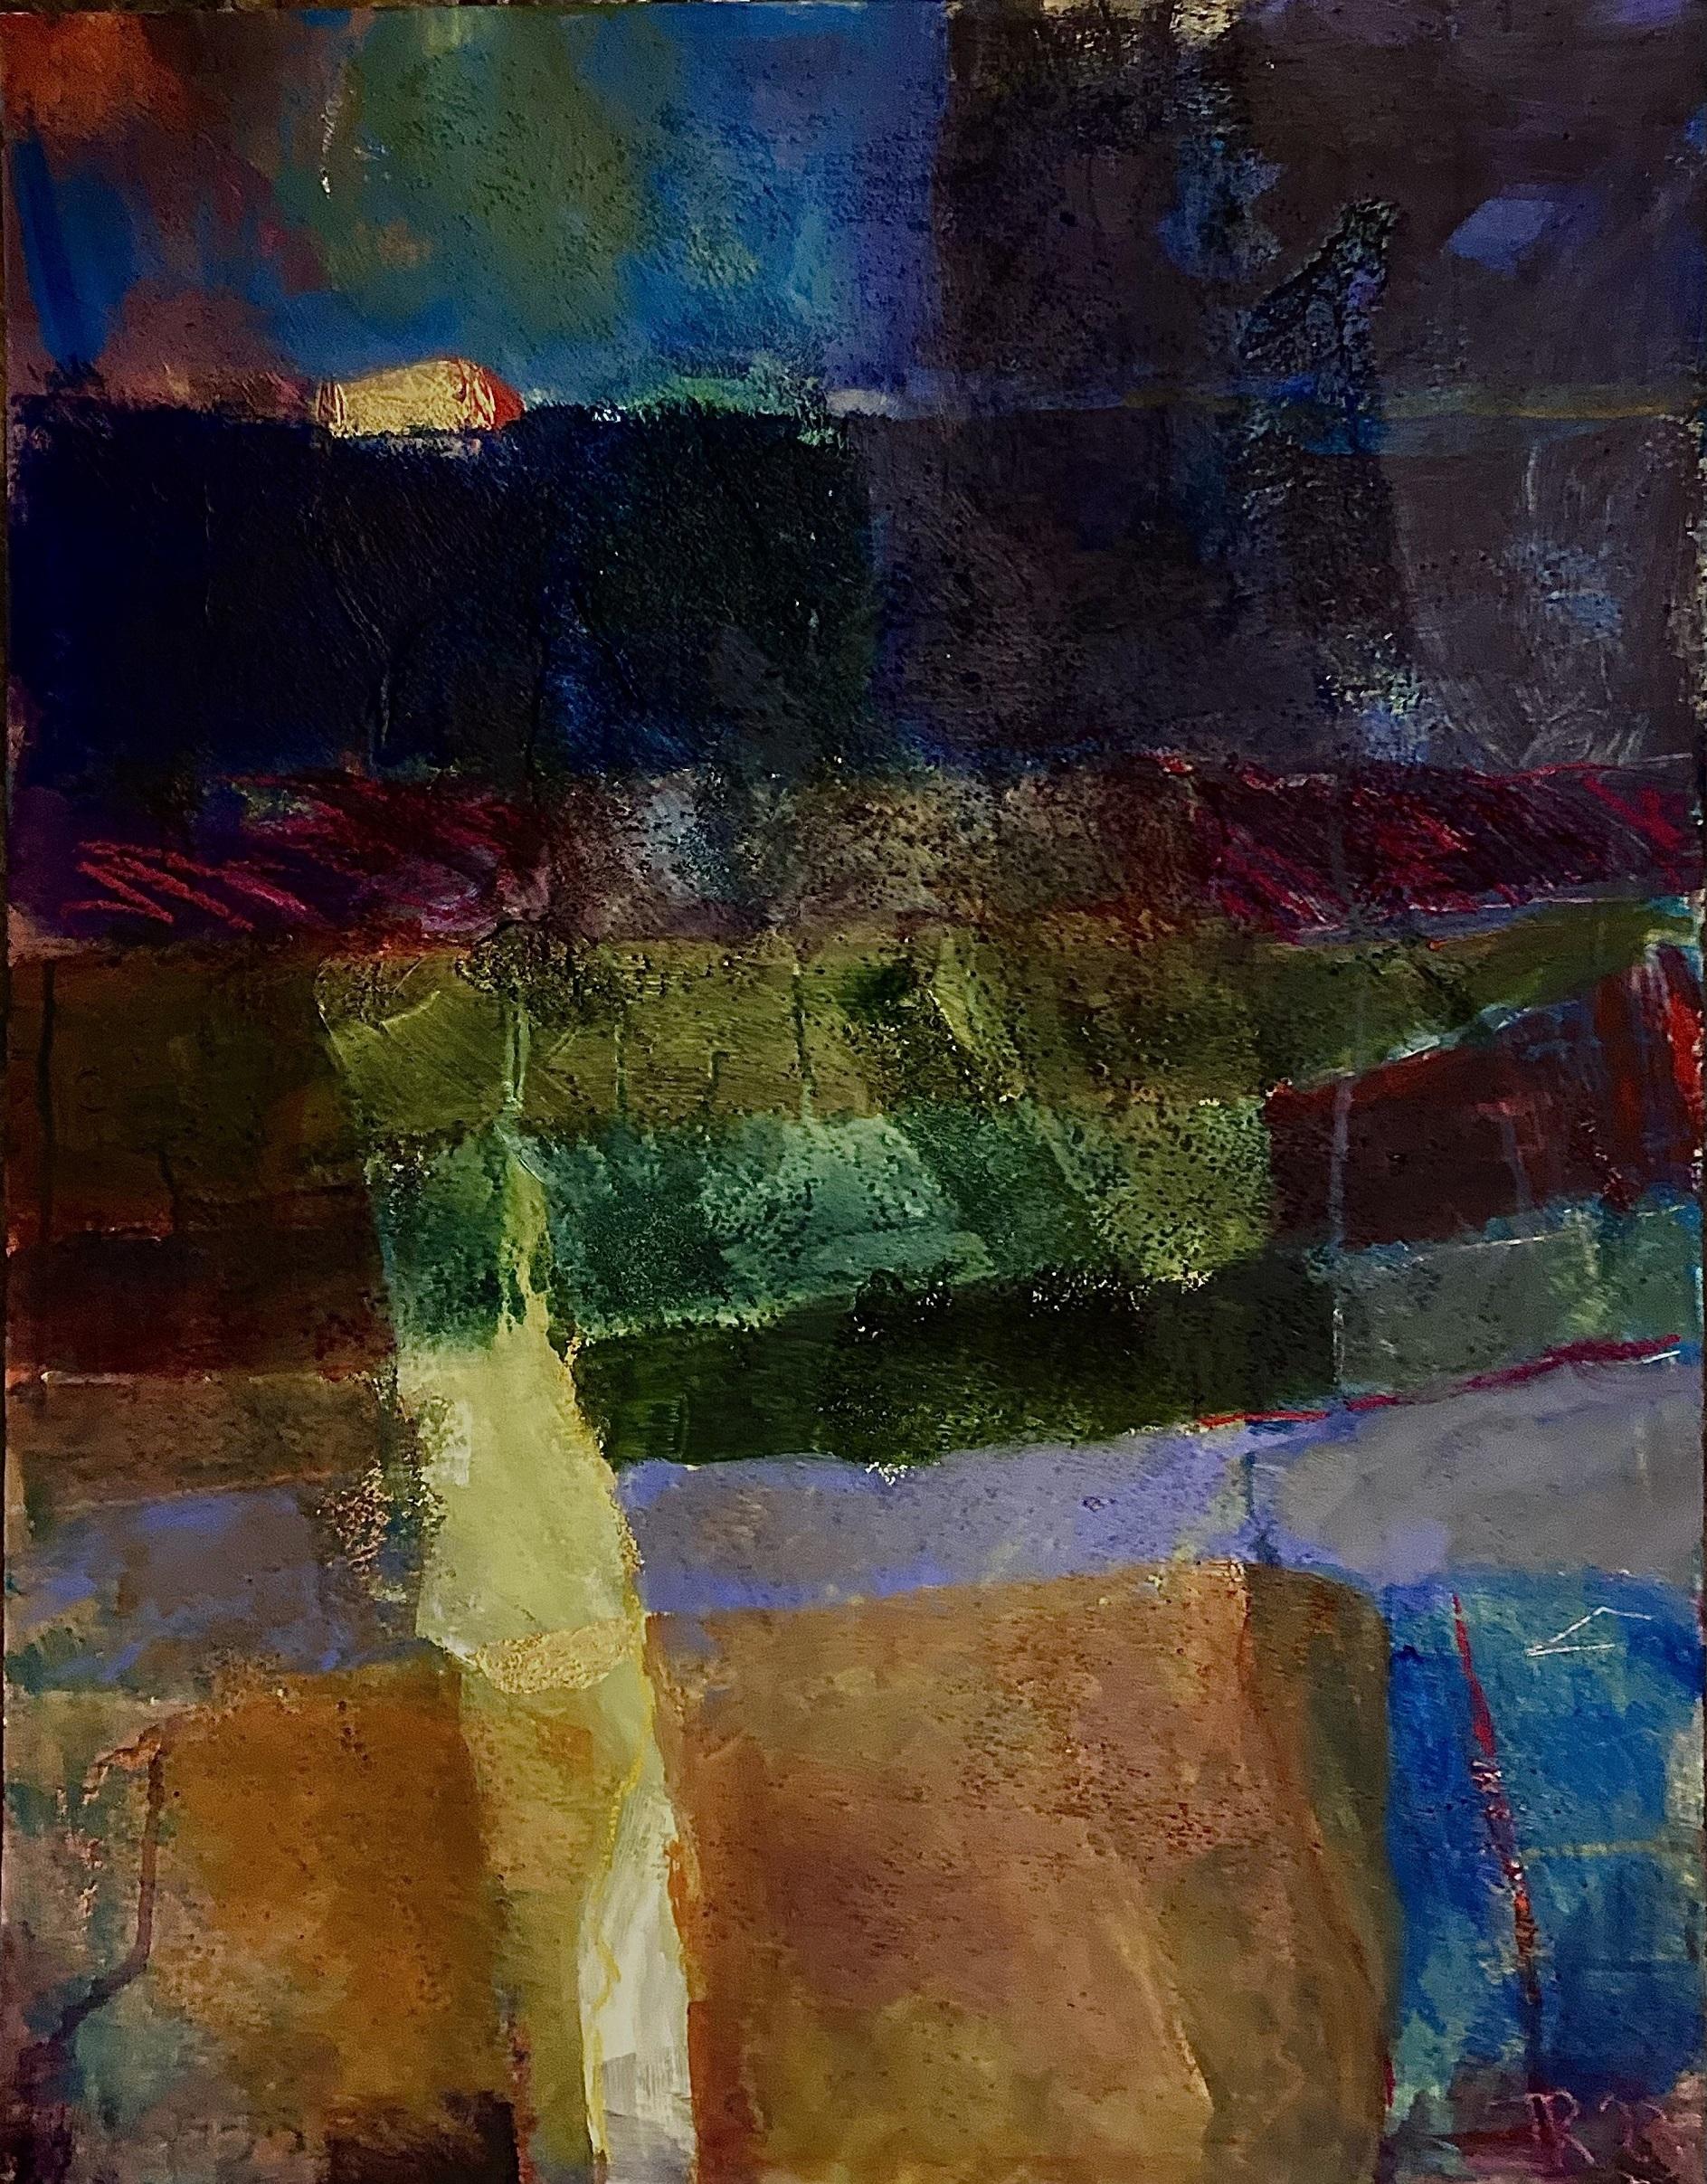 Abstract Painting Jon Rowland - « At the Going Down of the Sun », peinture originale sur carton, art abstrait coloré